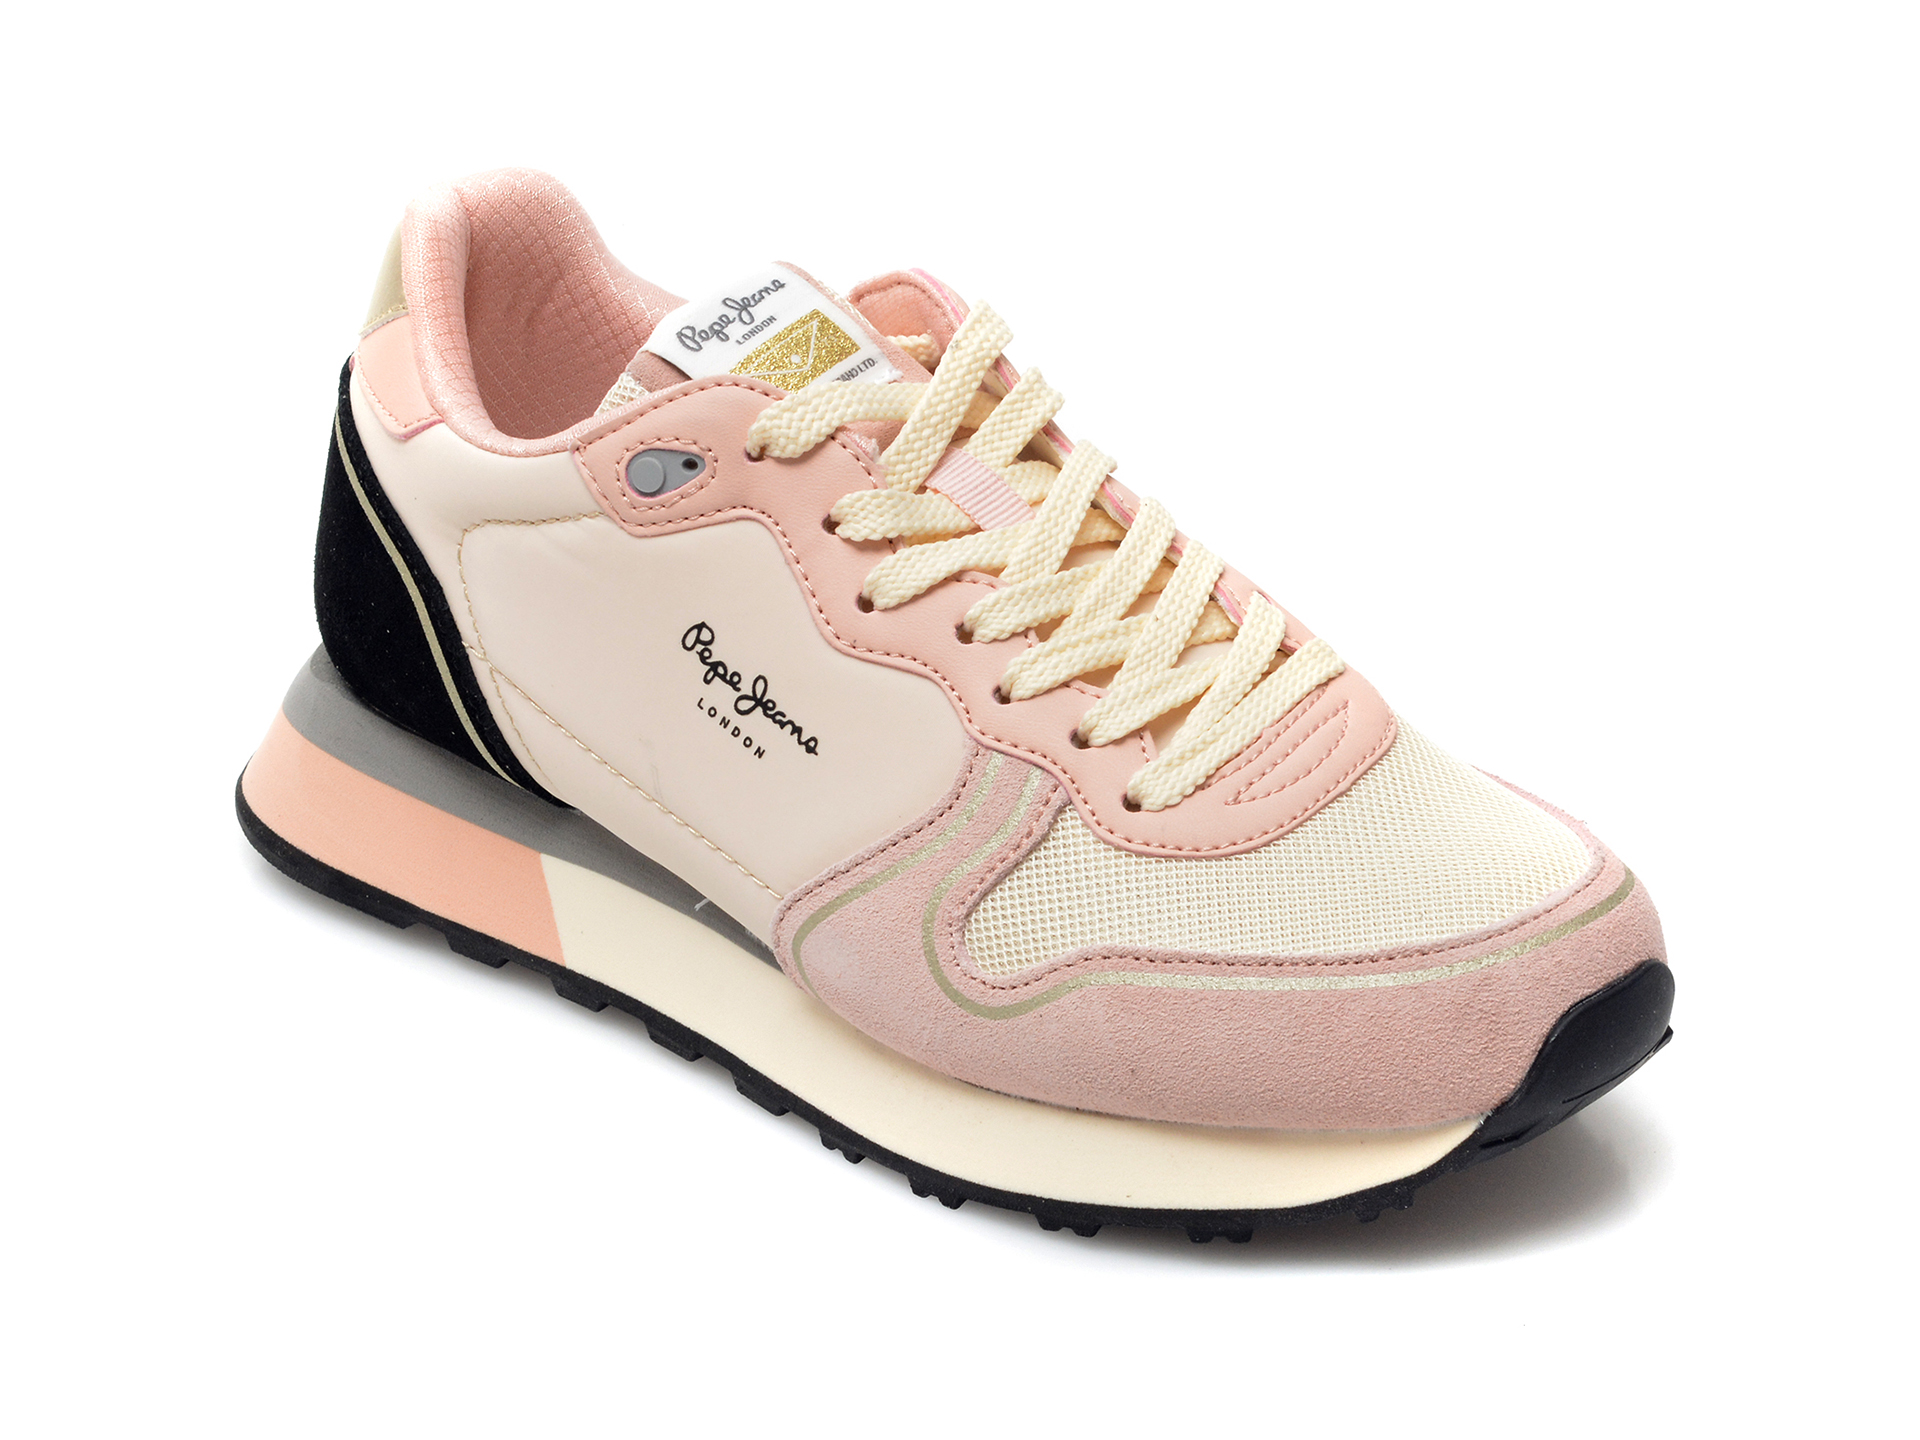 Pantofi sport PEPE JEANS roz, 3116299, din material textil si piele naturala